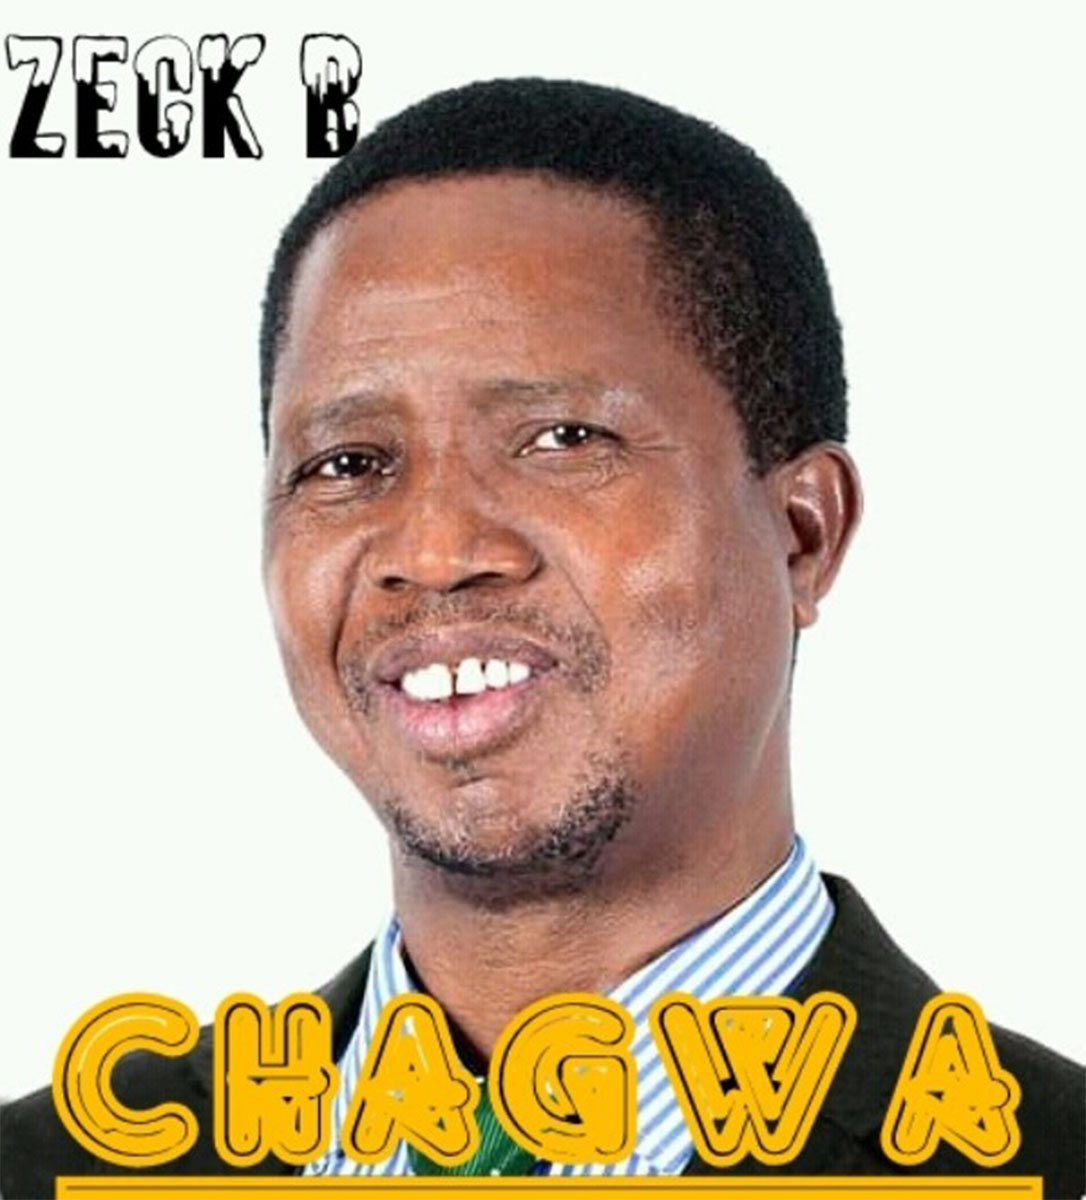 Zeck B - Chagwa (Prod. Eddy)